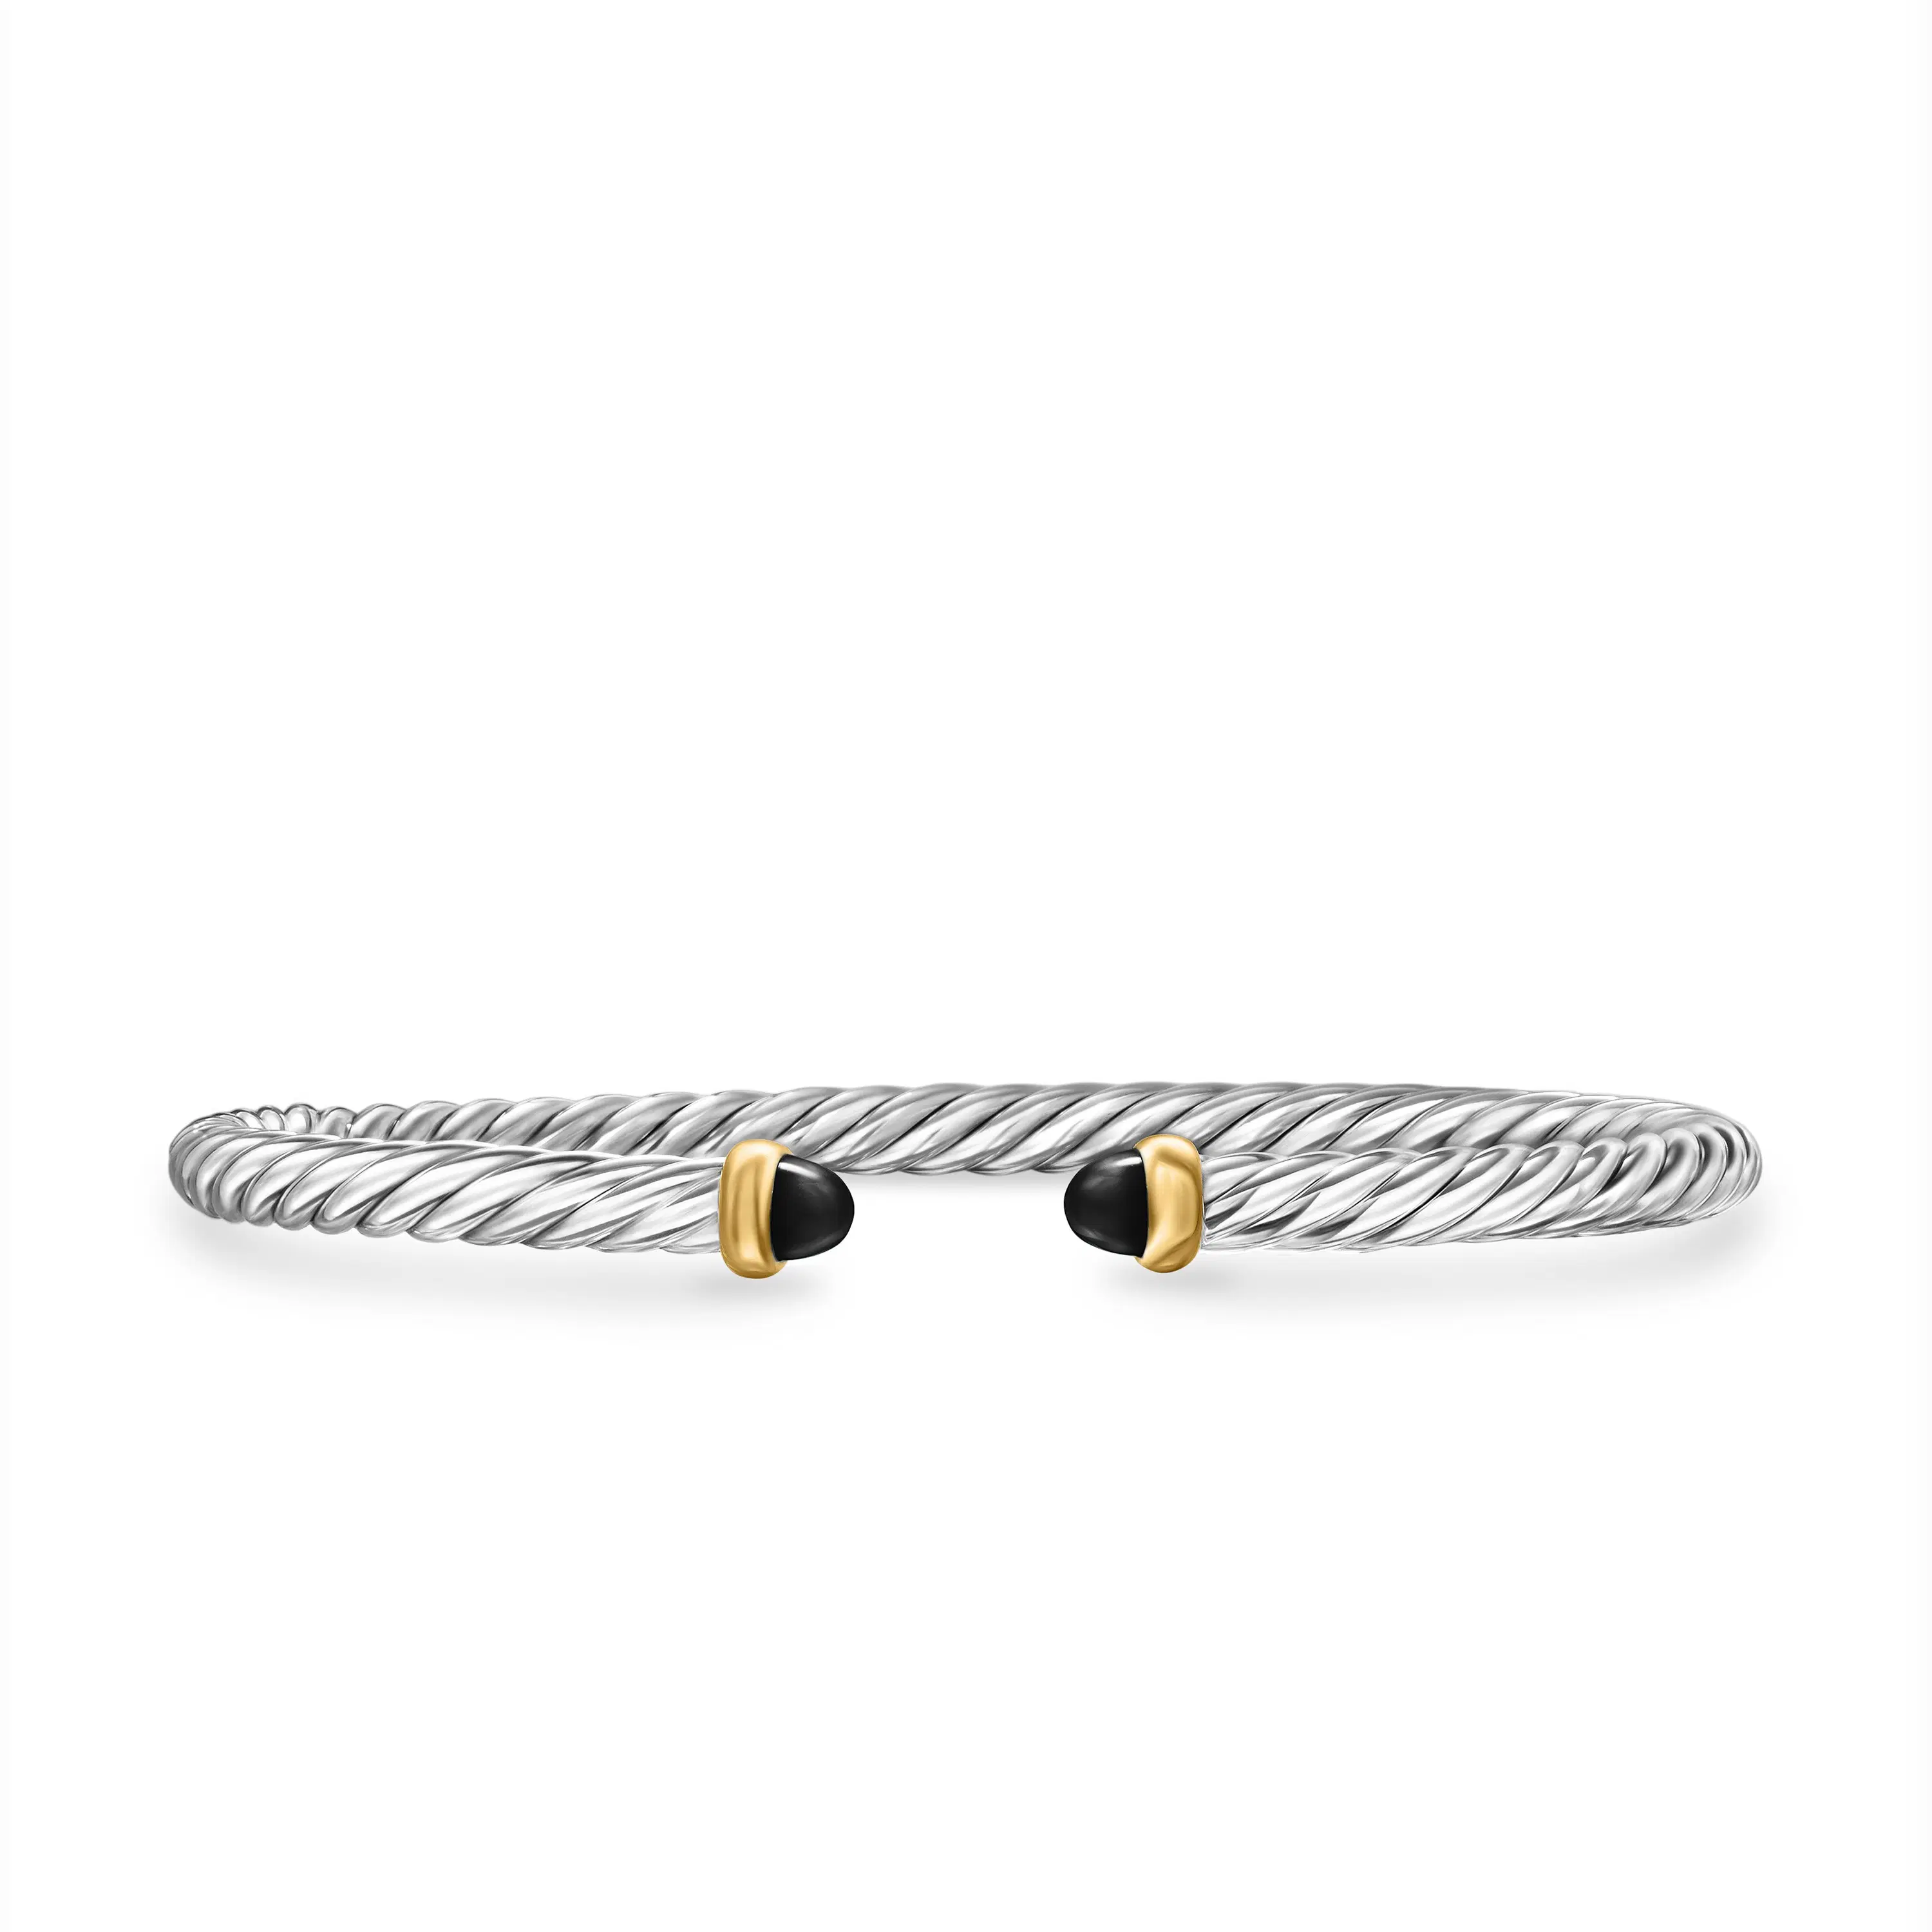 David Yurman Cable Flex Sterling Silver Bracelet with Black Onyx, Size Large